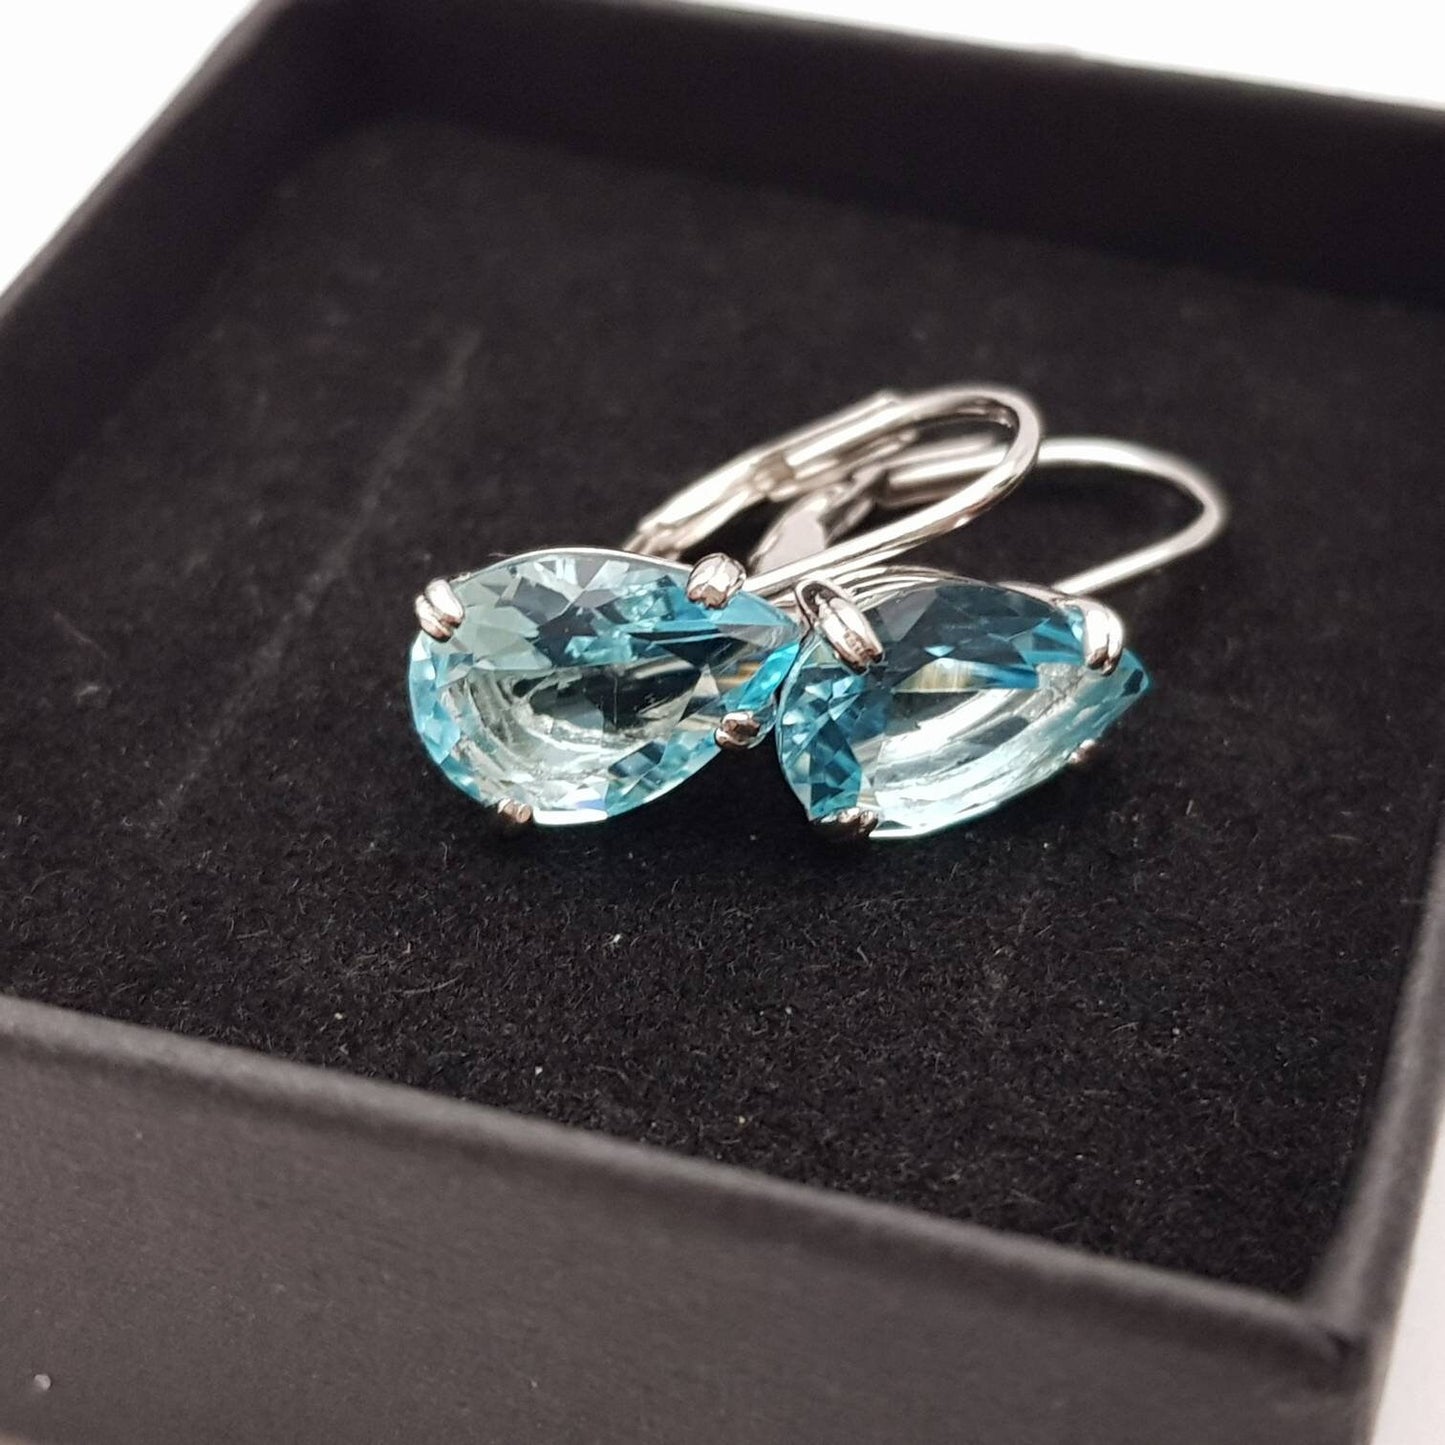 Sparkling turquoise blue silver lever back earrings, teardrop leverback earrings, March birthstone